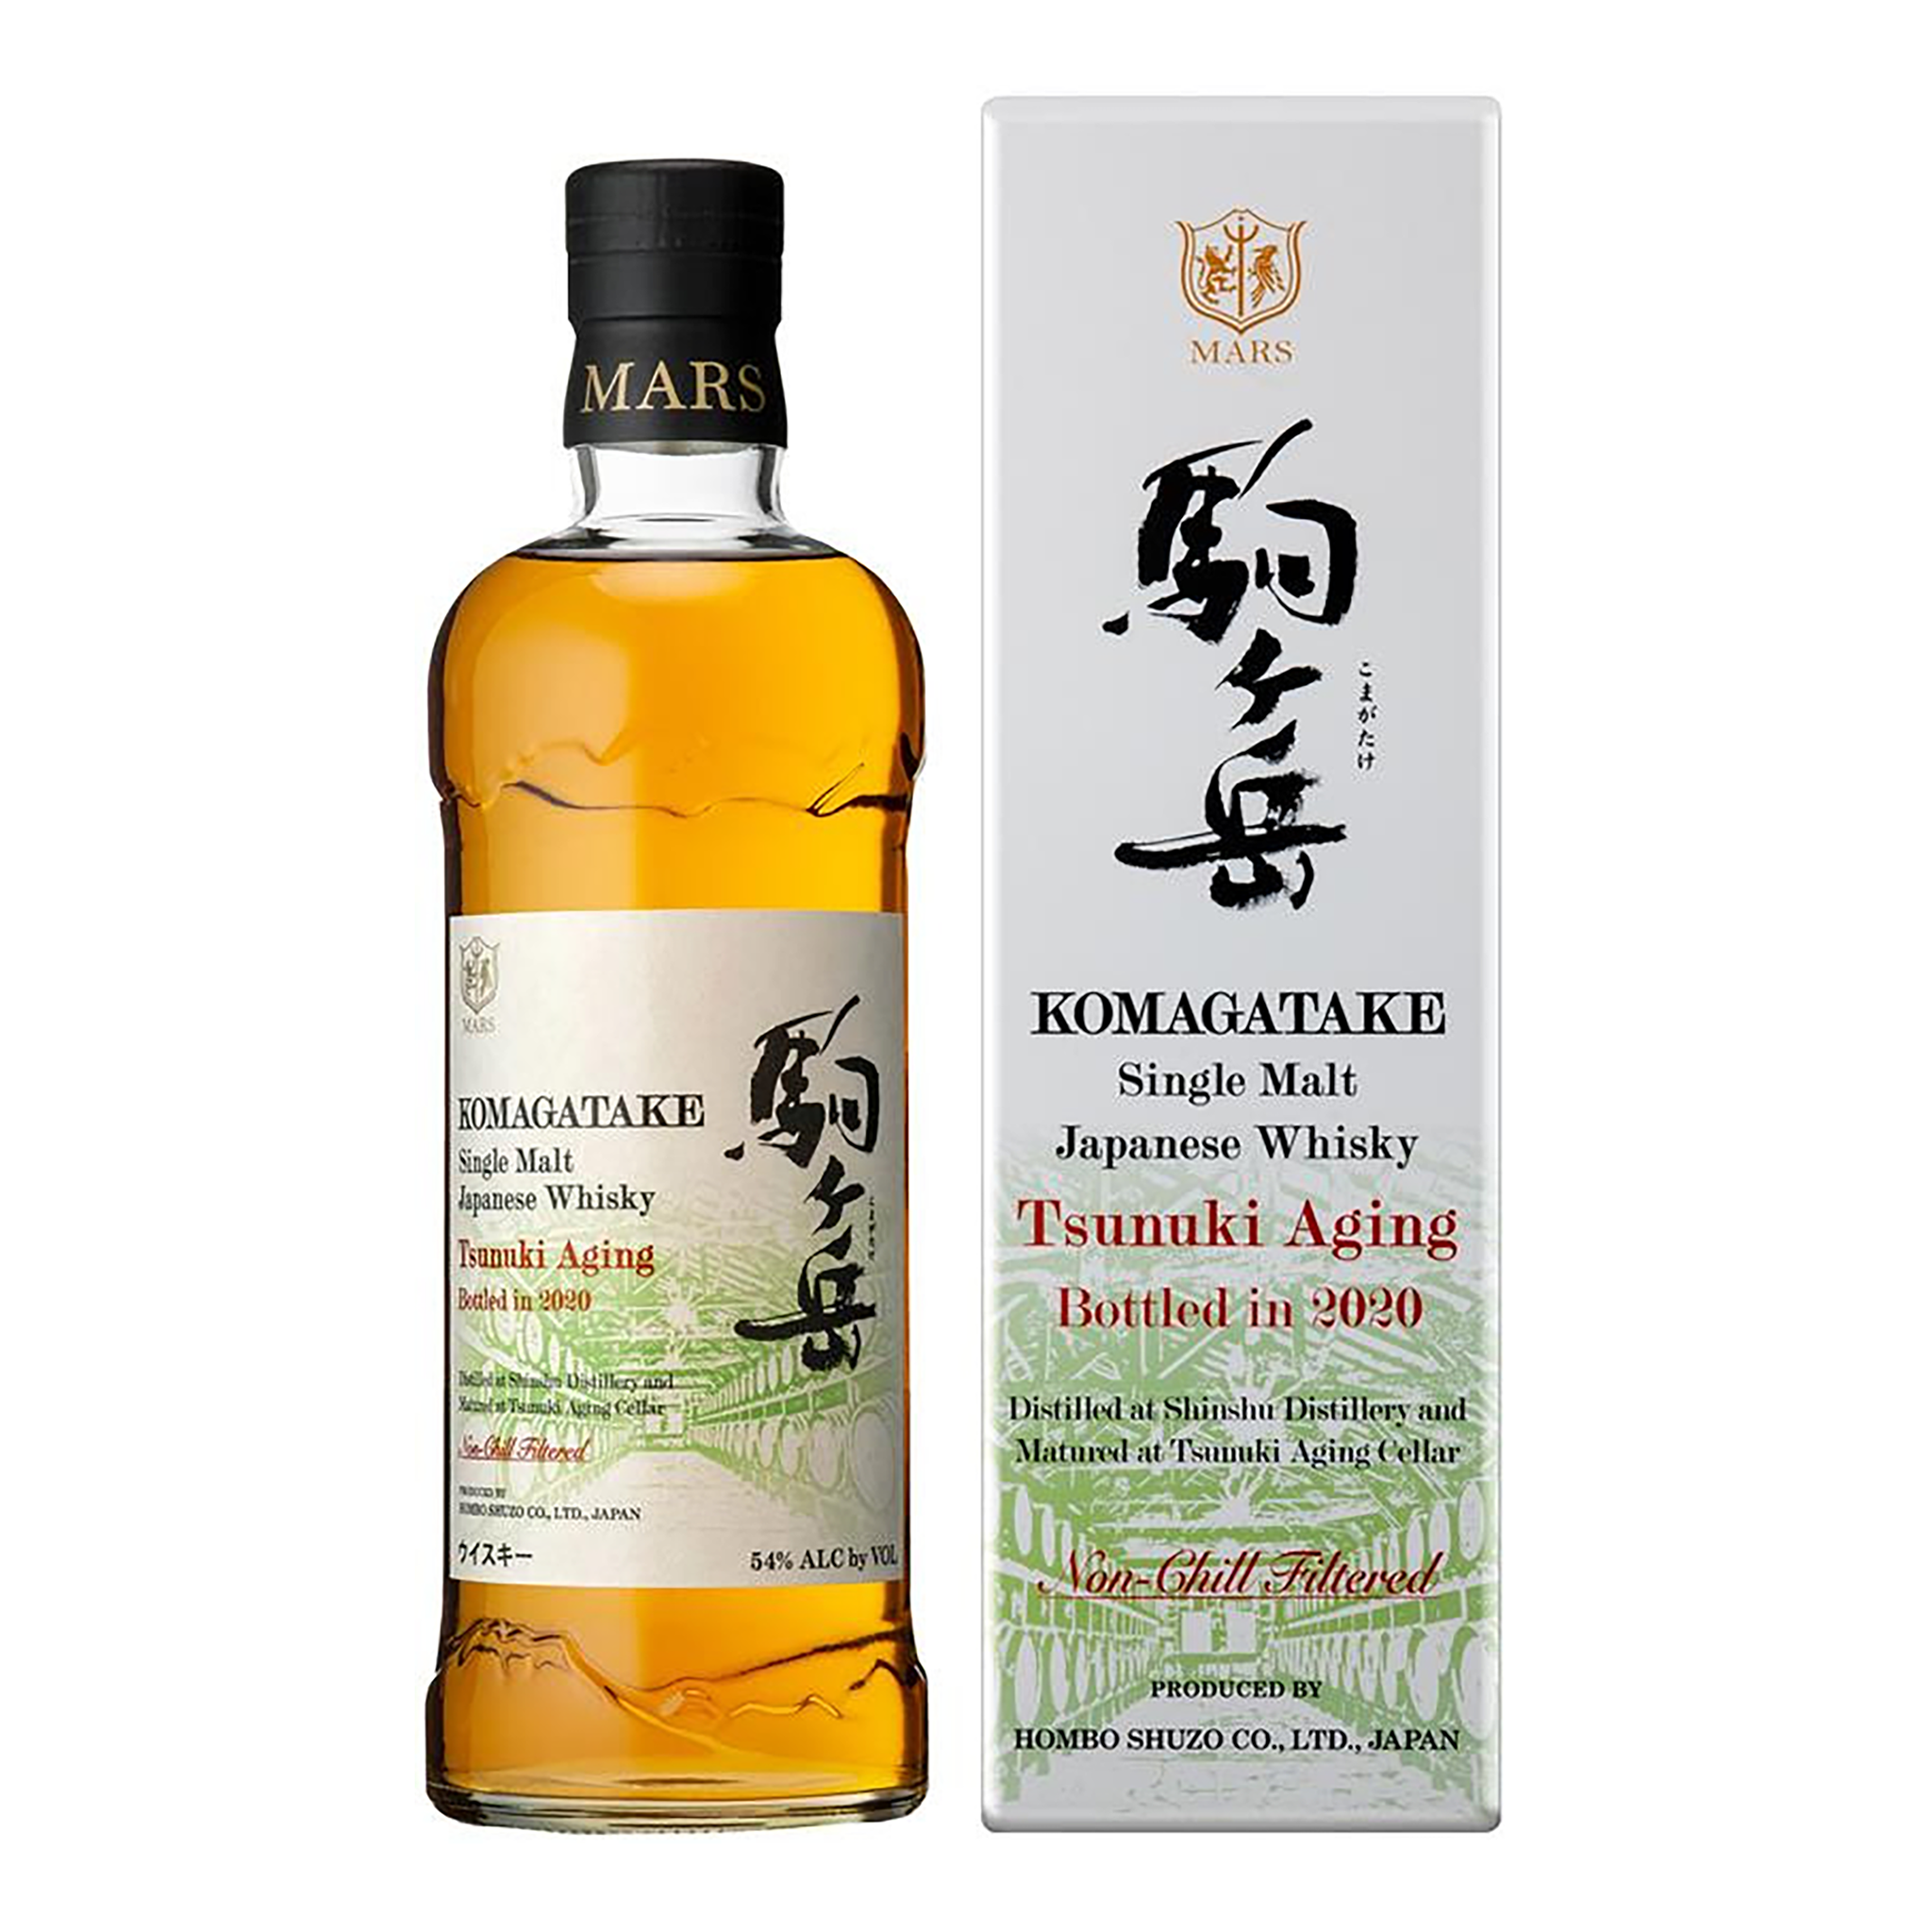 Mars Distillery Komagatake Tsunuki Aging Single Malt Japanese Whisky 700ml (2020 Release) - Kent Street Cellars